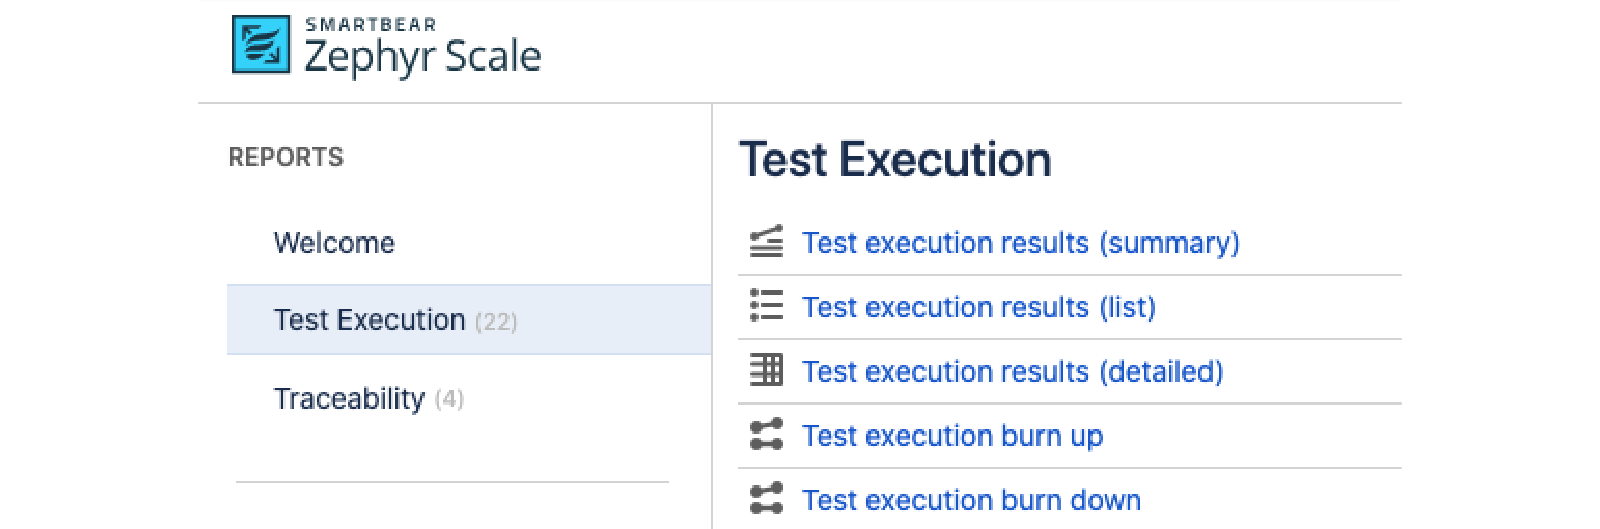 Scheda Test Execution (Esecuzione test) in Zephyr Scale